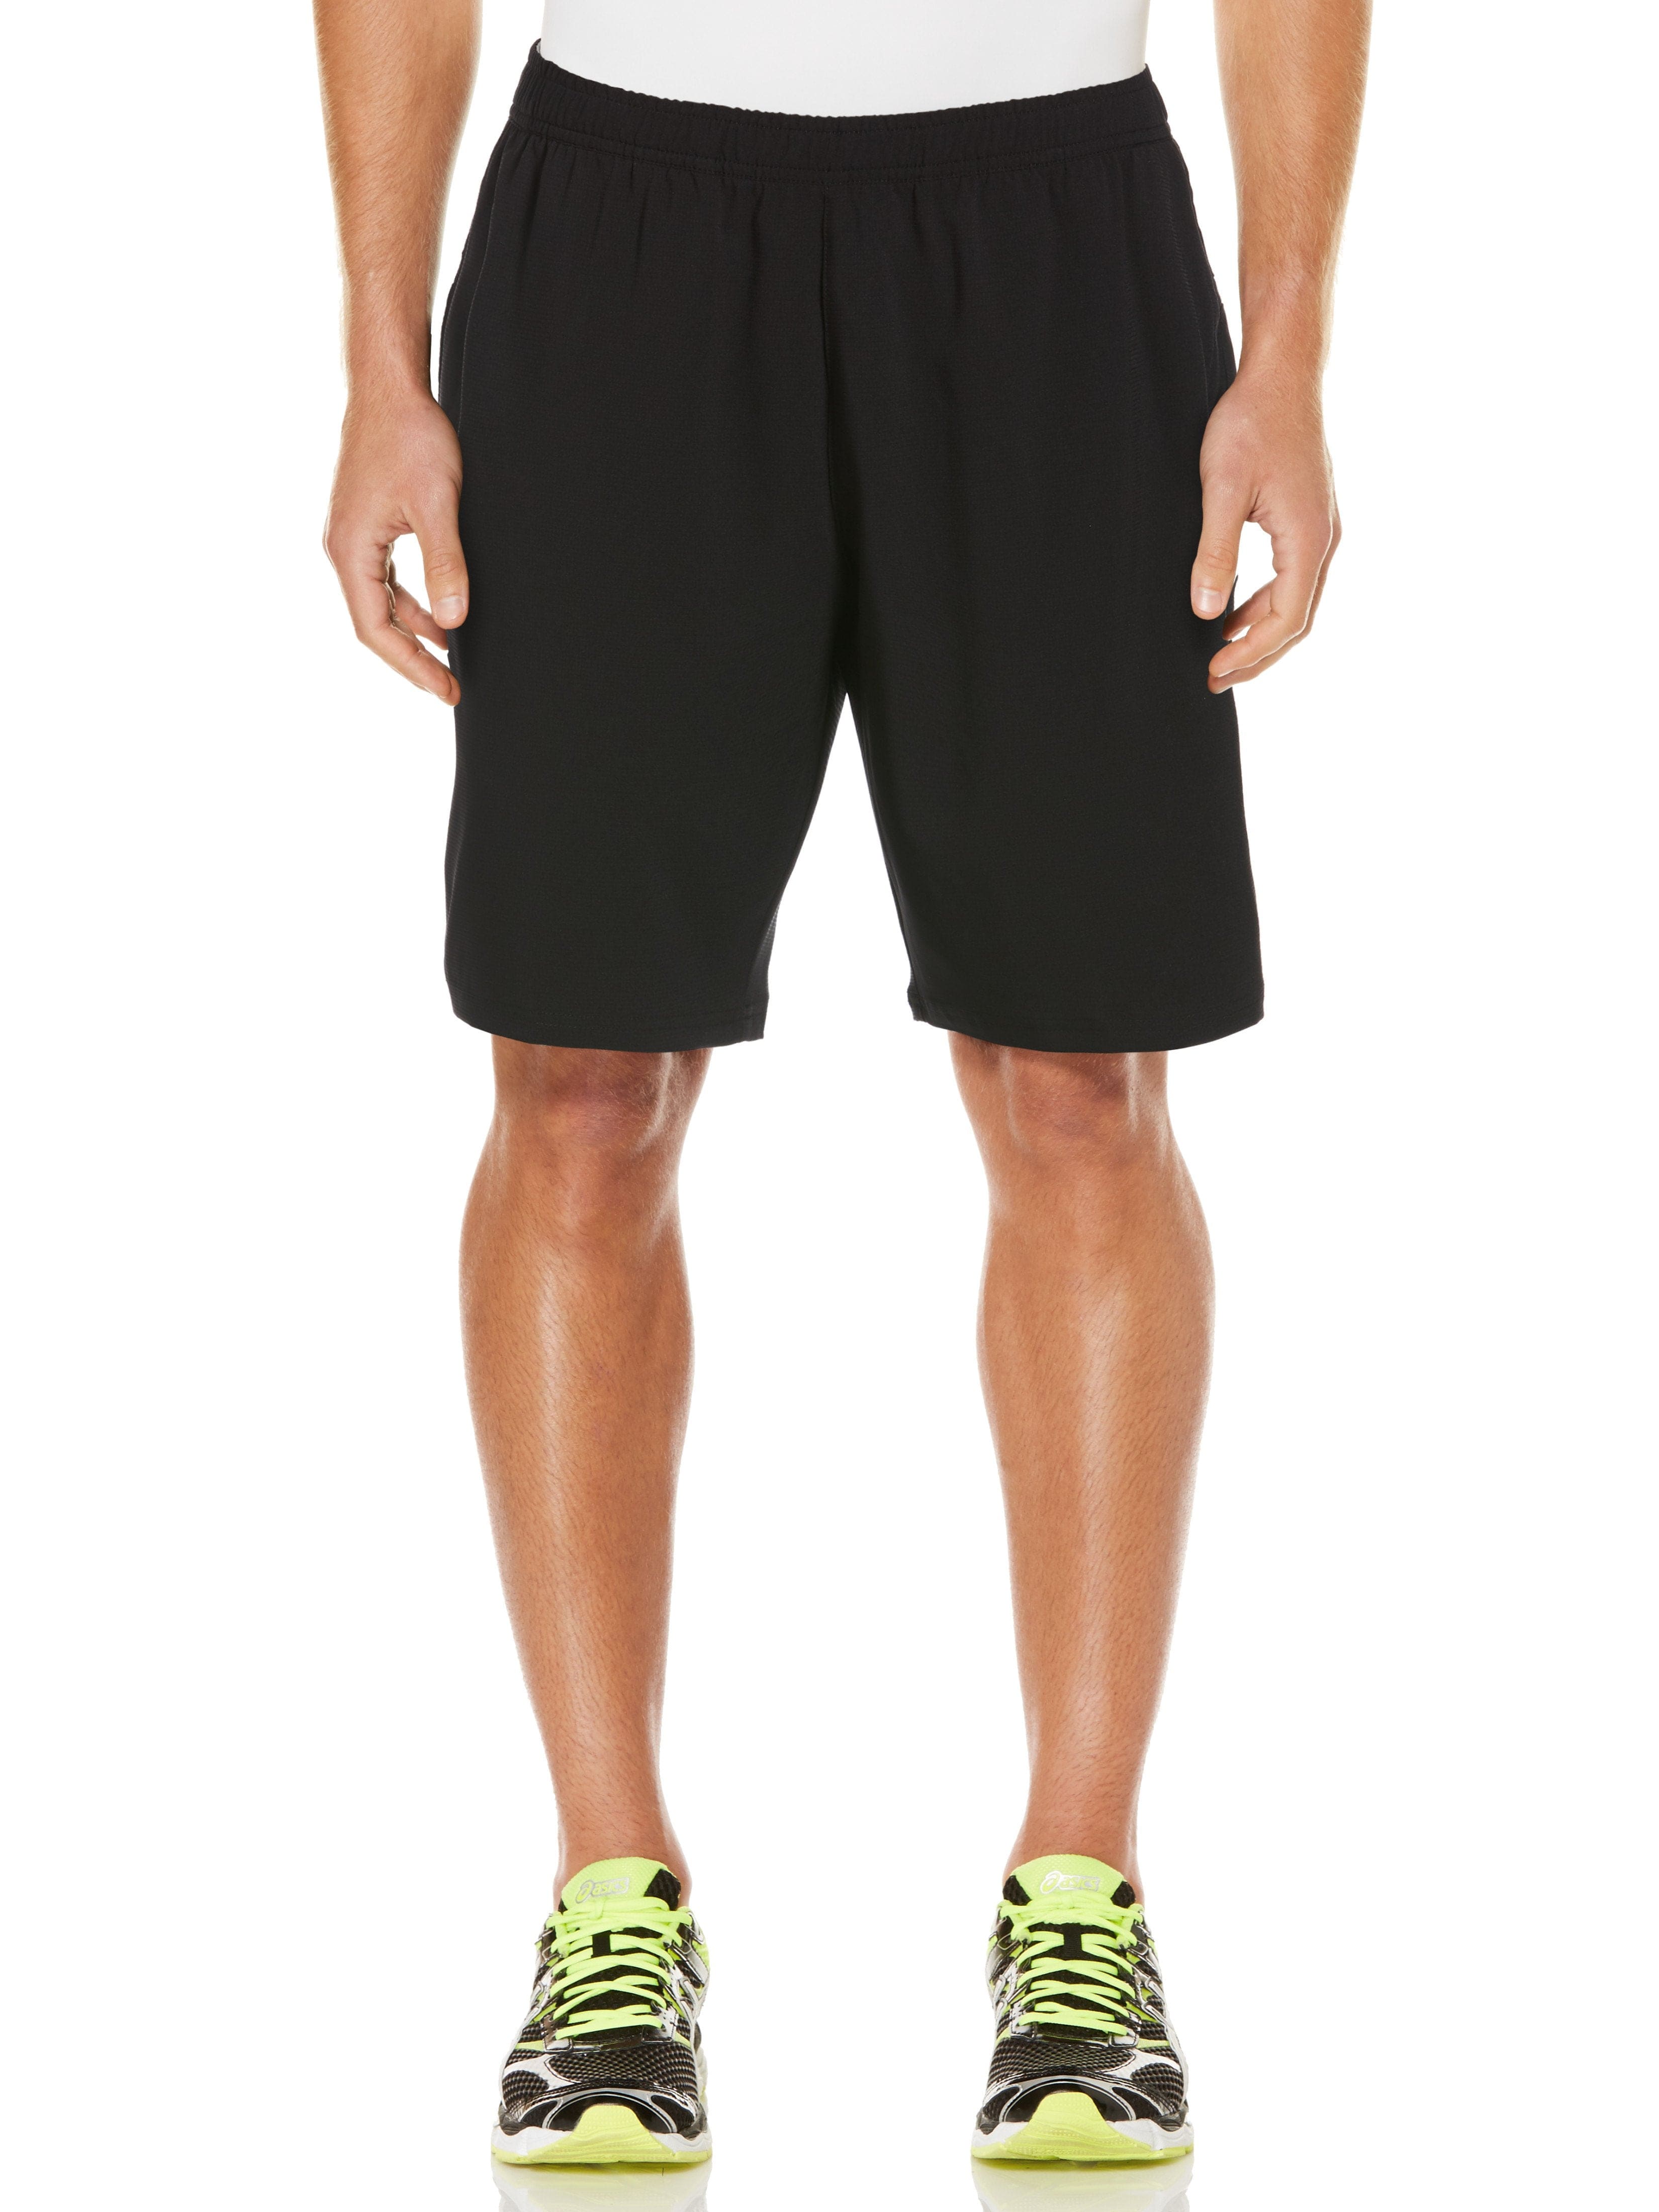 Grand Slam Mens Athletic Shorts, Size Medium, Black, Polyester/Elastane | Golf Apparel Shop